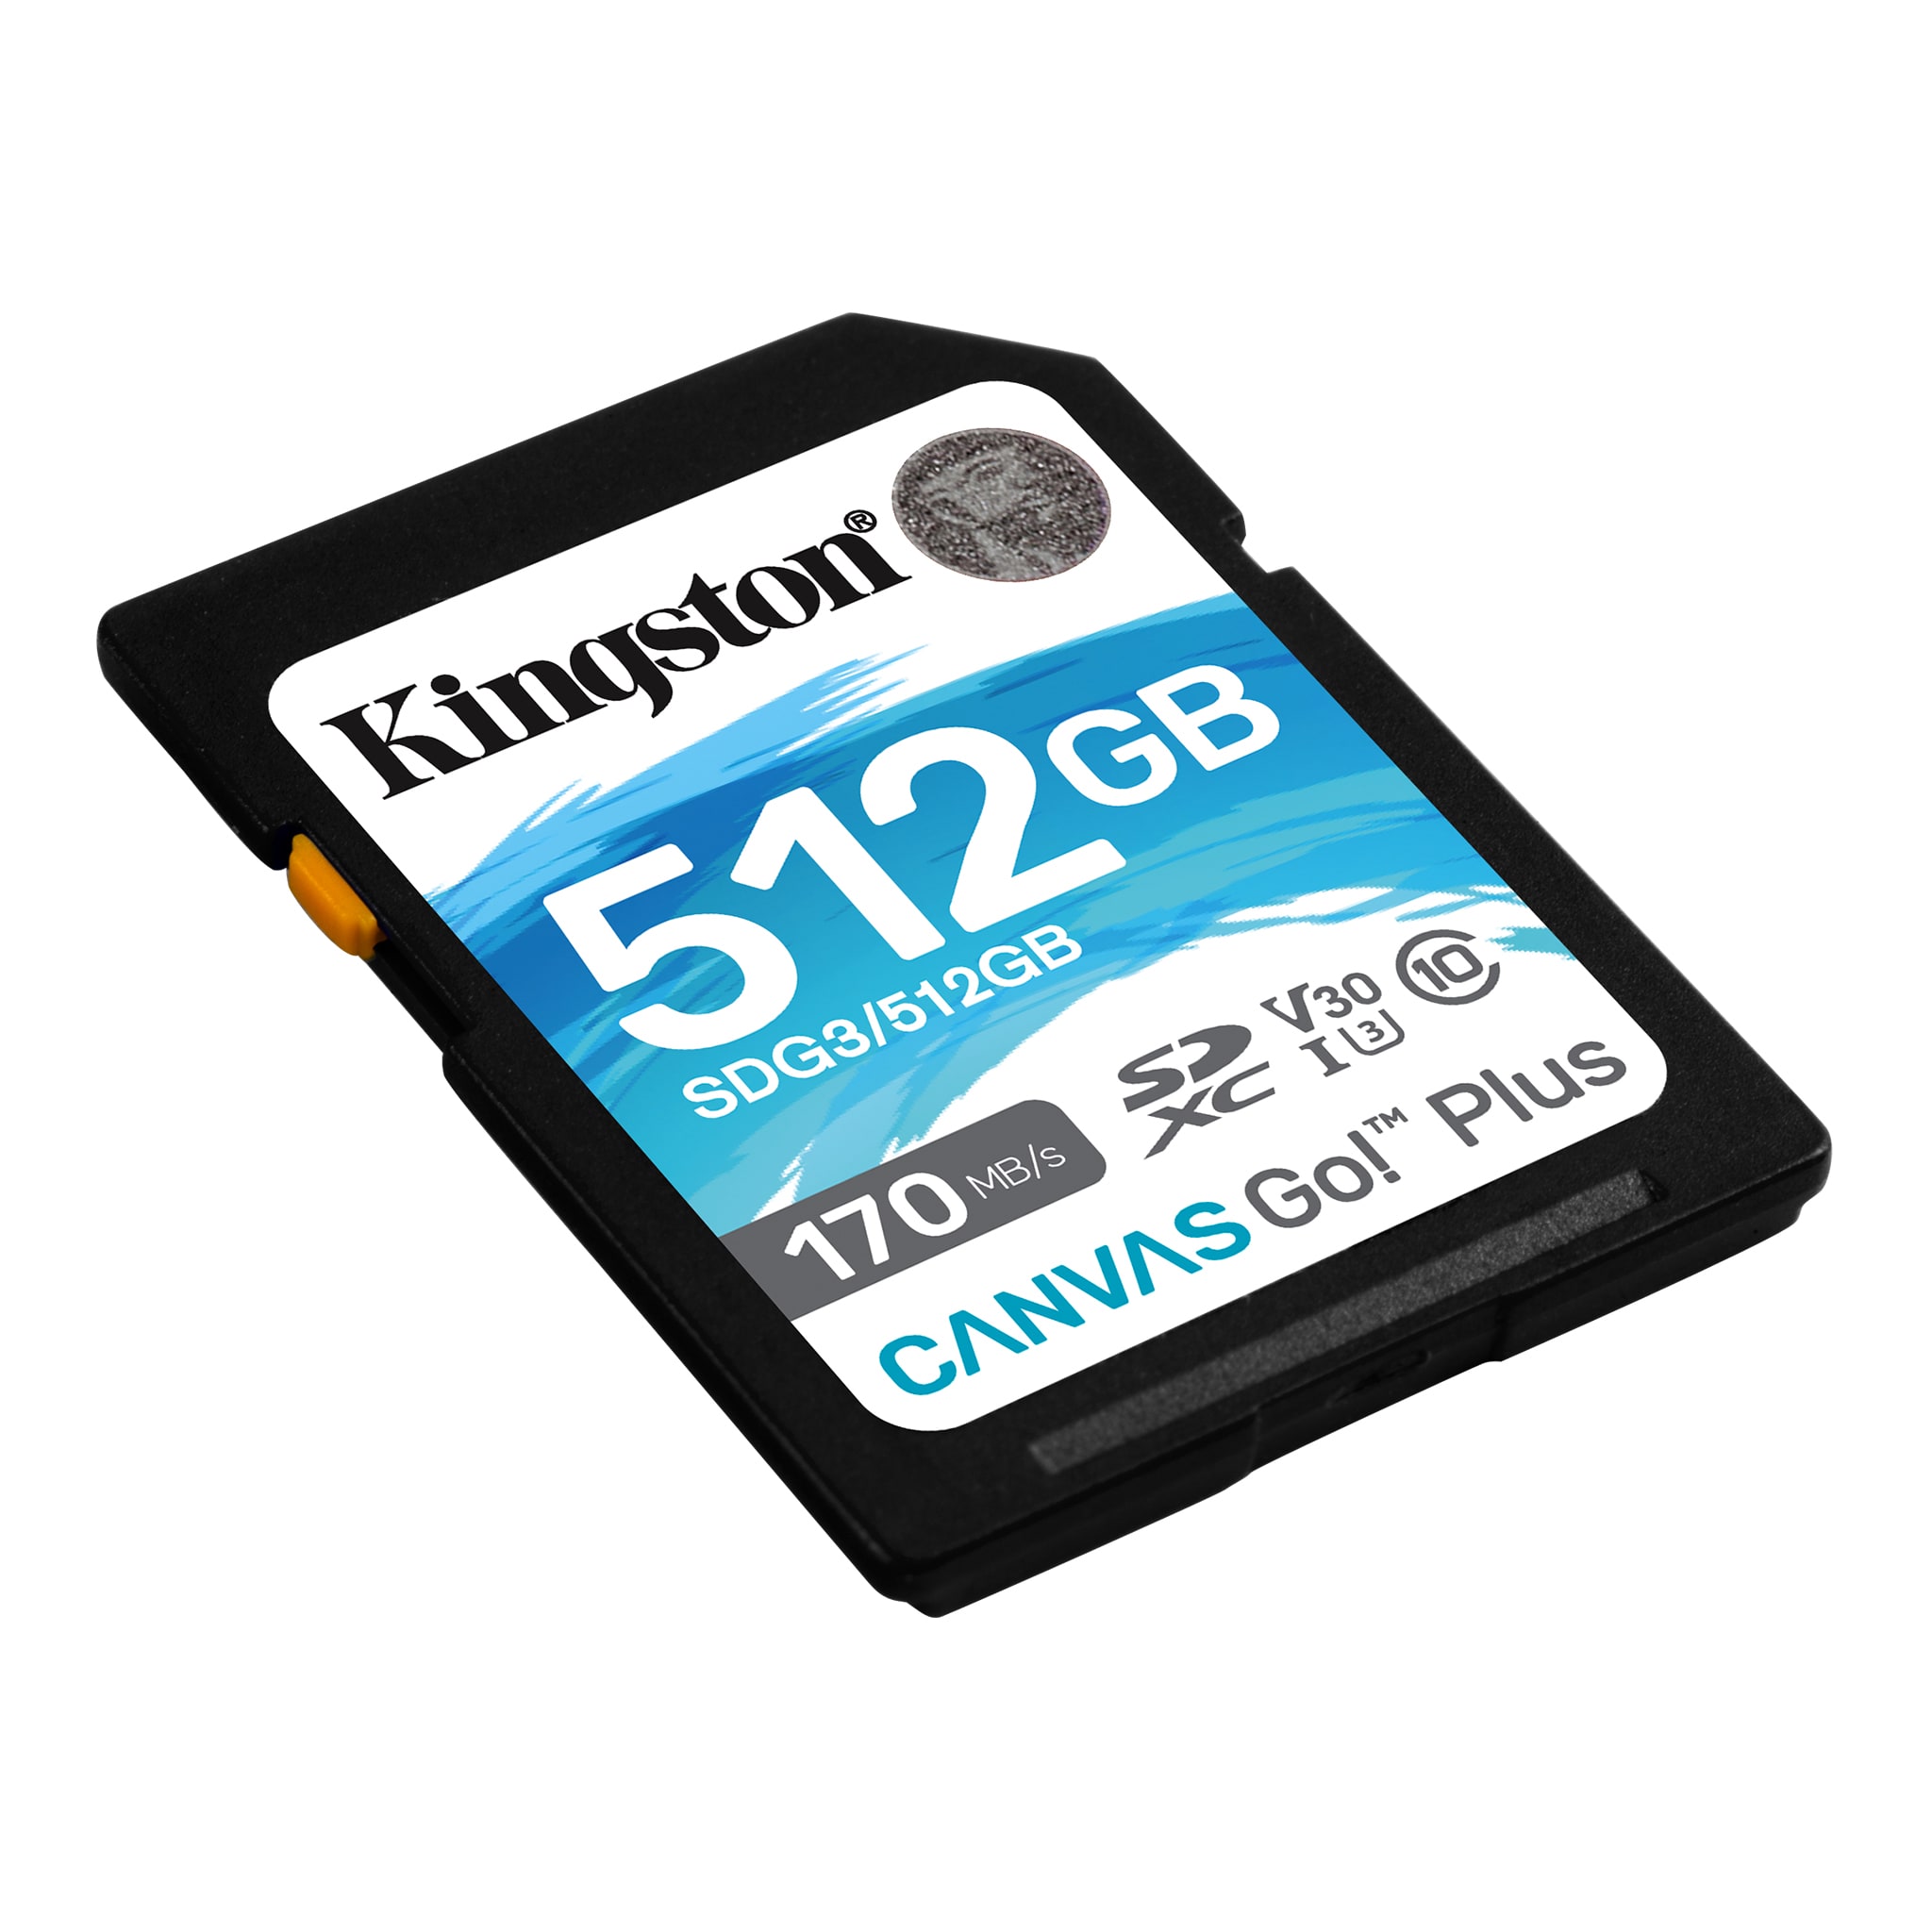 90MBs Works for Kingston Kingston Industrial Grade 8GB LG V521WG MicroSDHC Card Verified by SanFlash. 